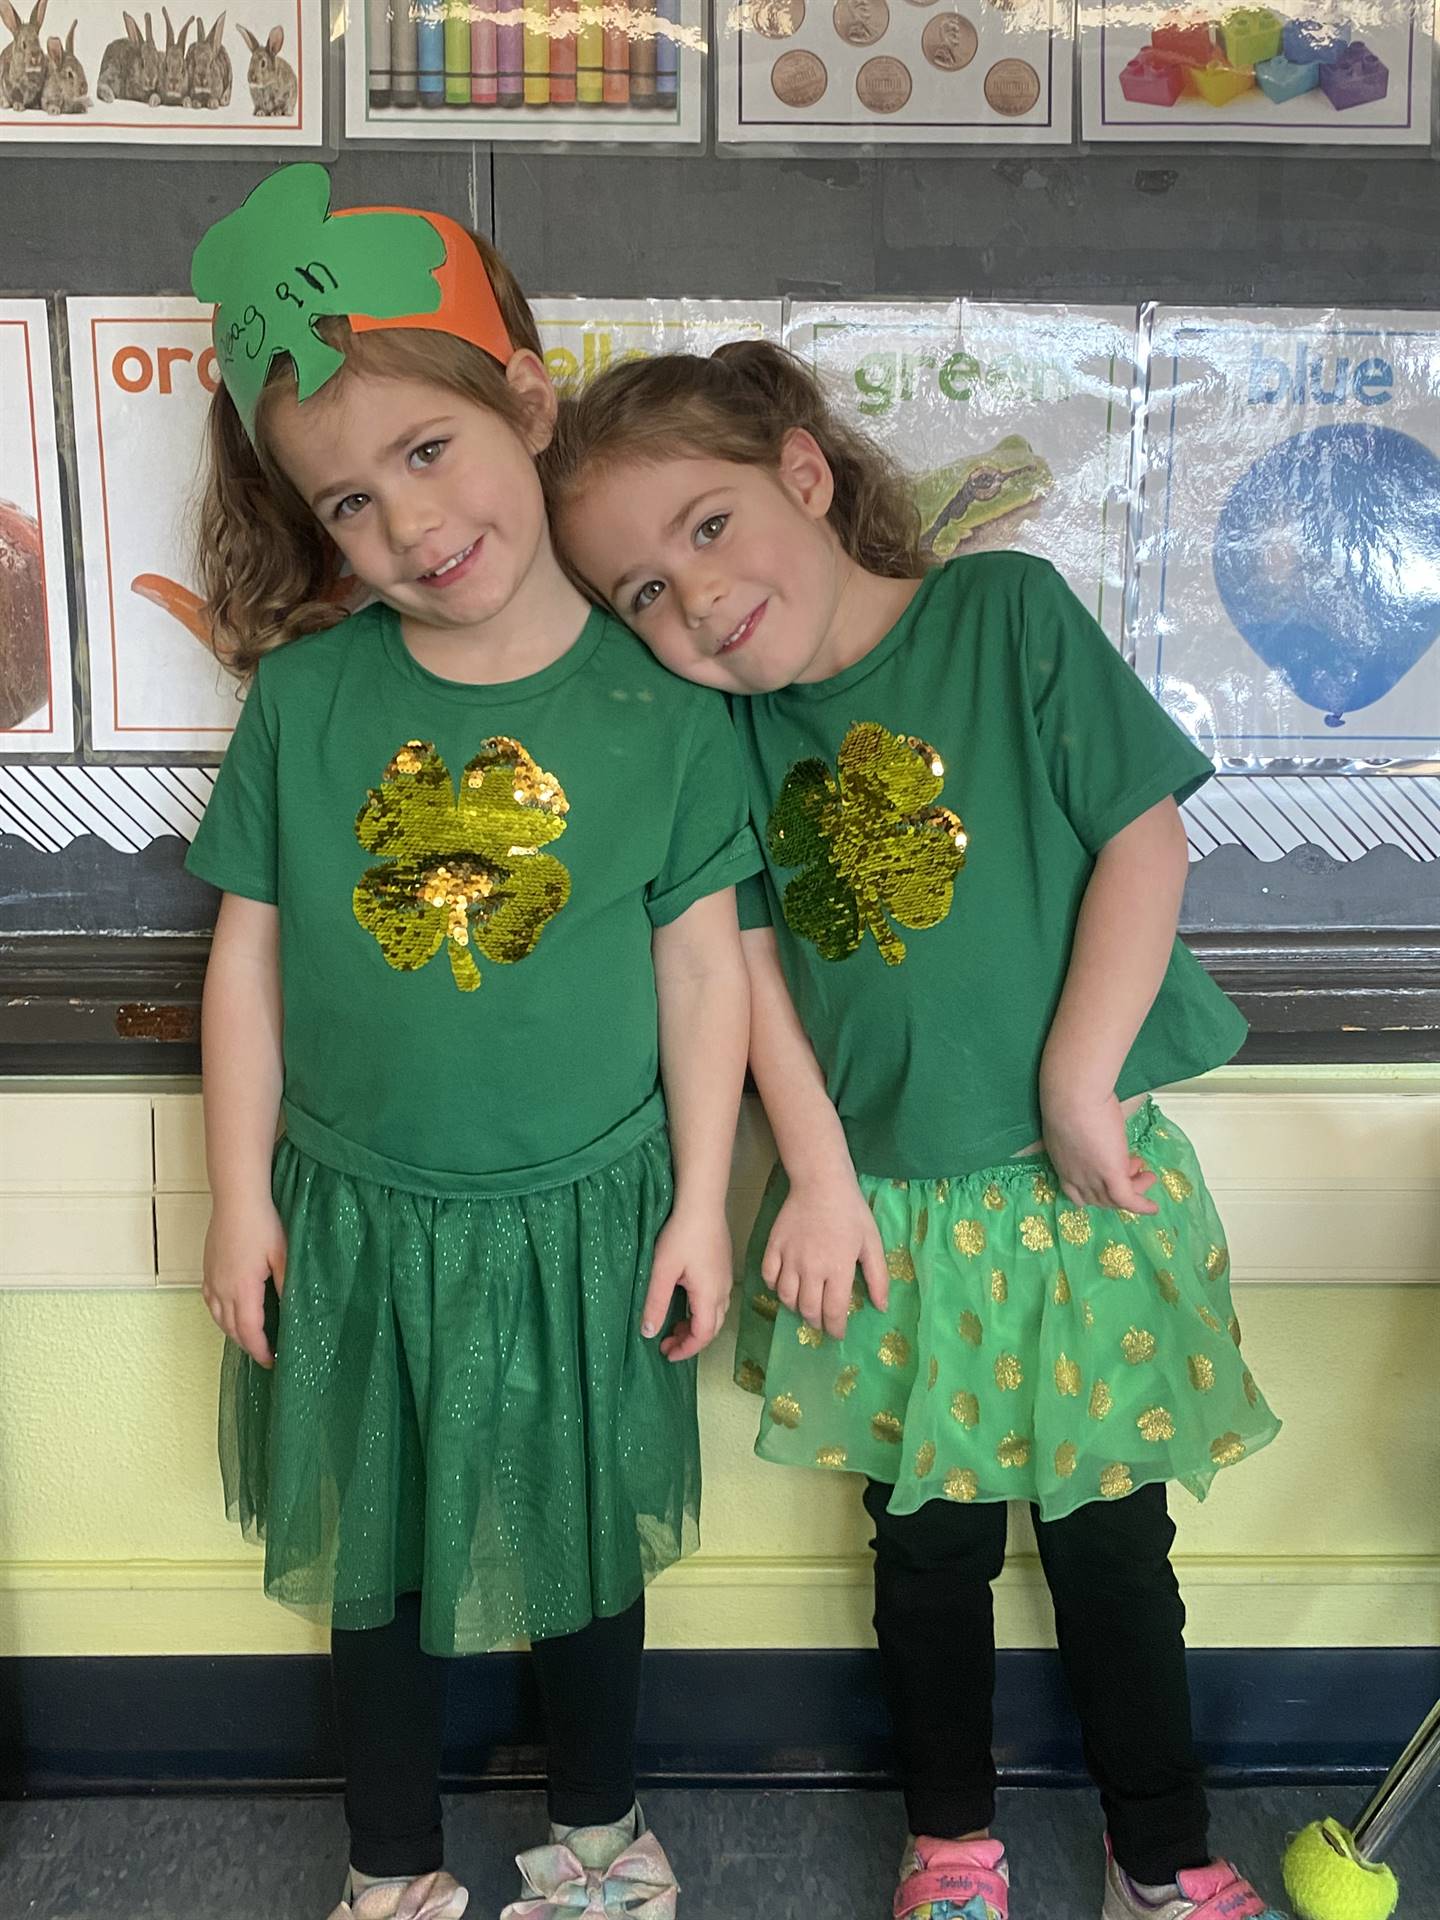 twins dressed in green attire!